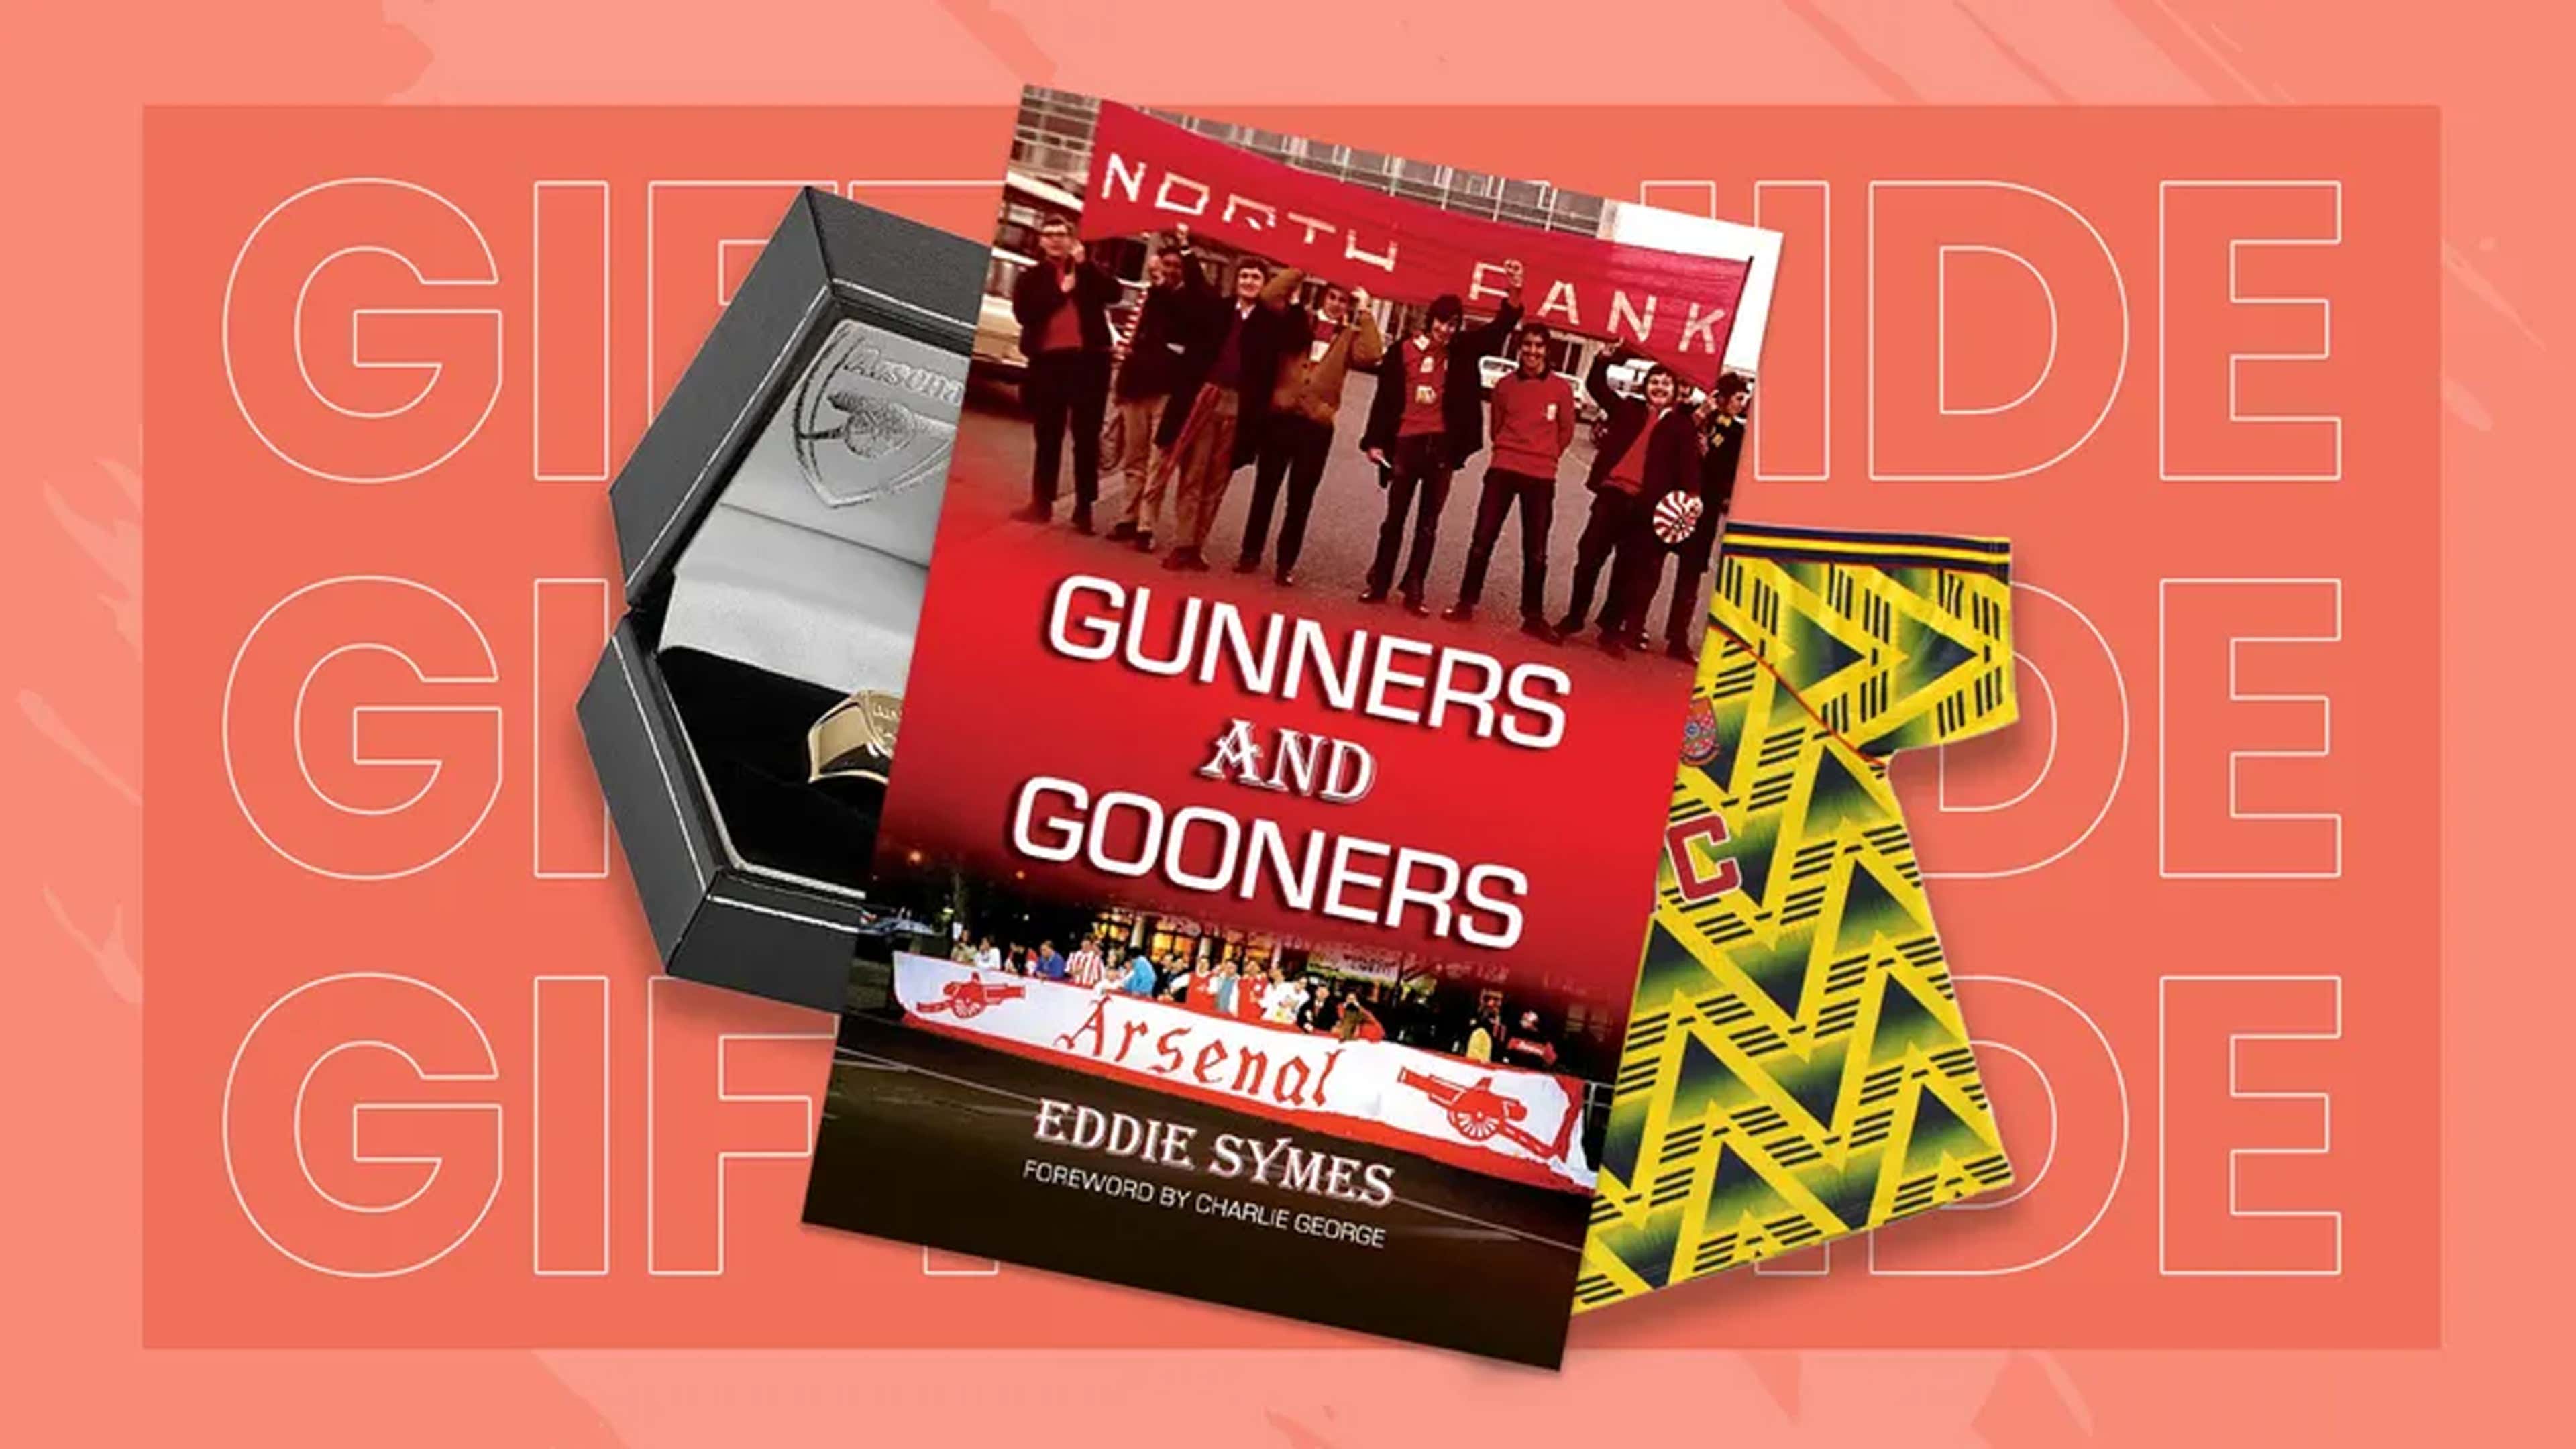 Arsenal FC SoccerStarz Saka - Select Sports Souvenirs